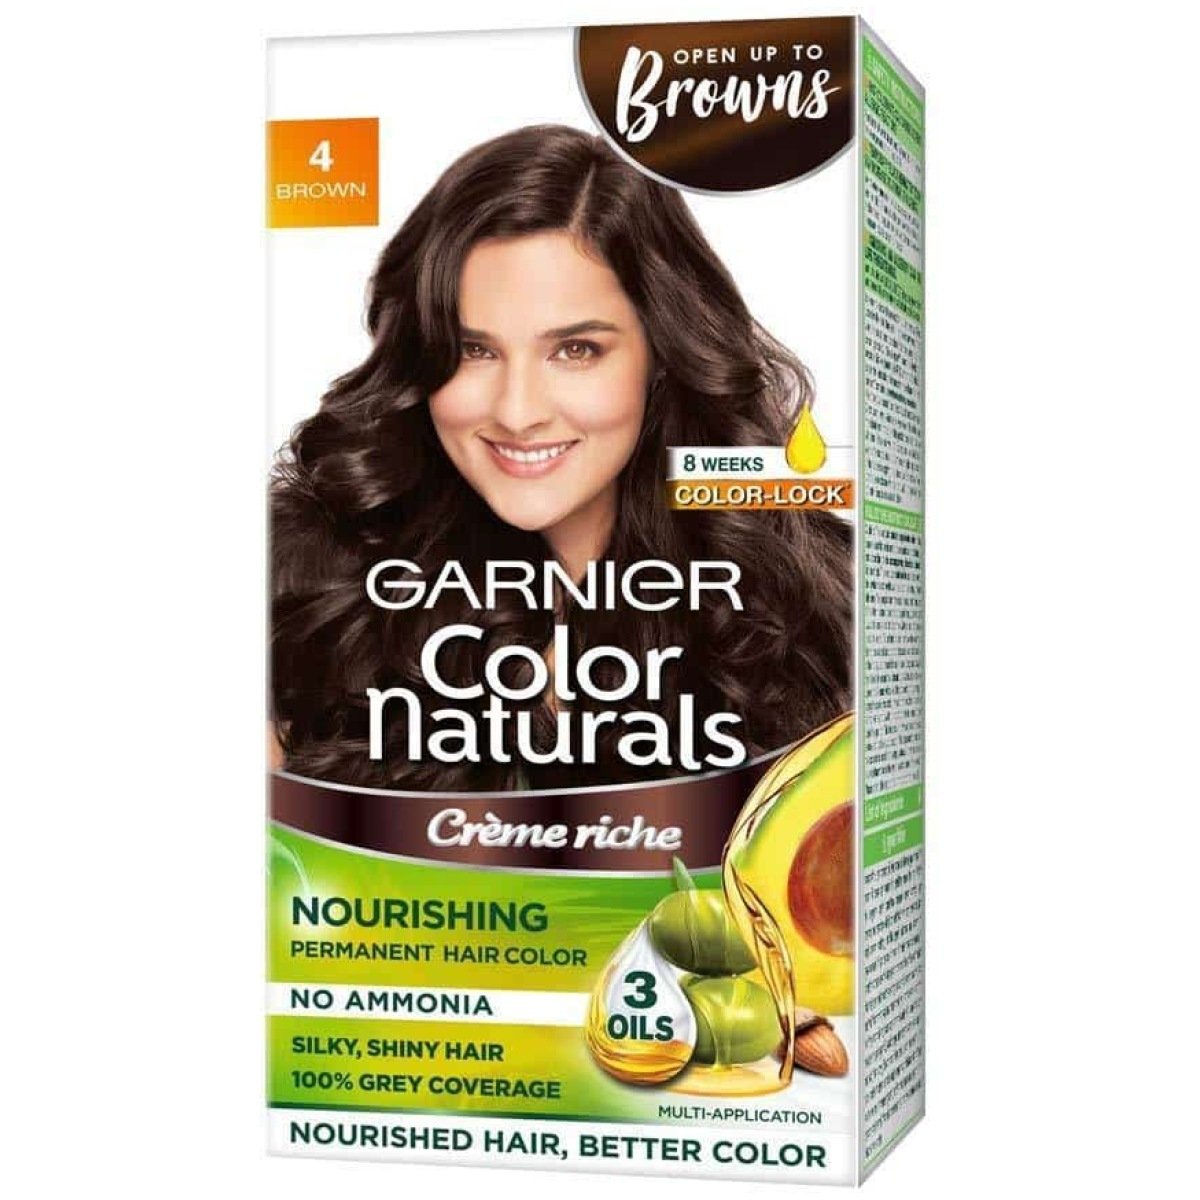 Garnier Color Natural Creme Riche 4 Brown (70ml+60g)